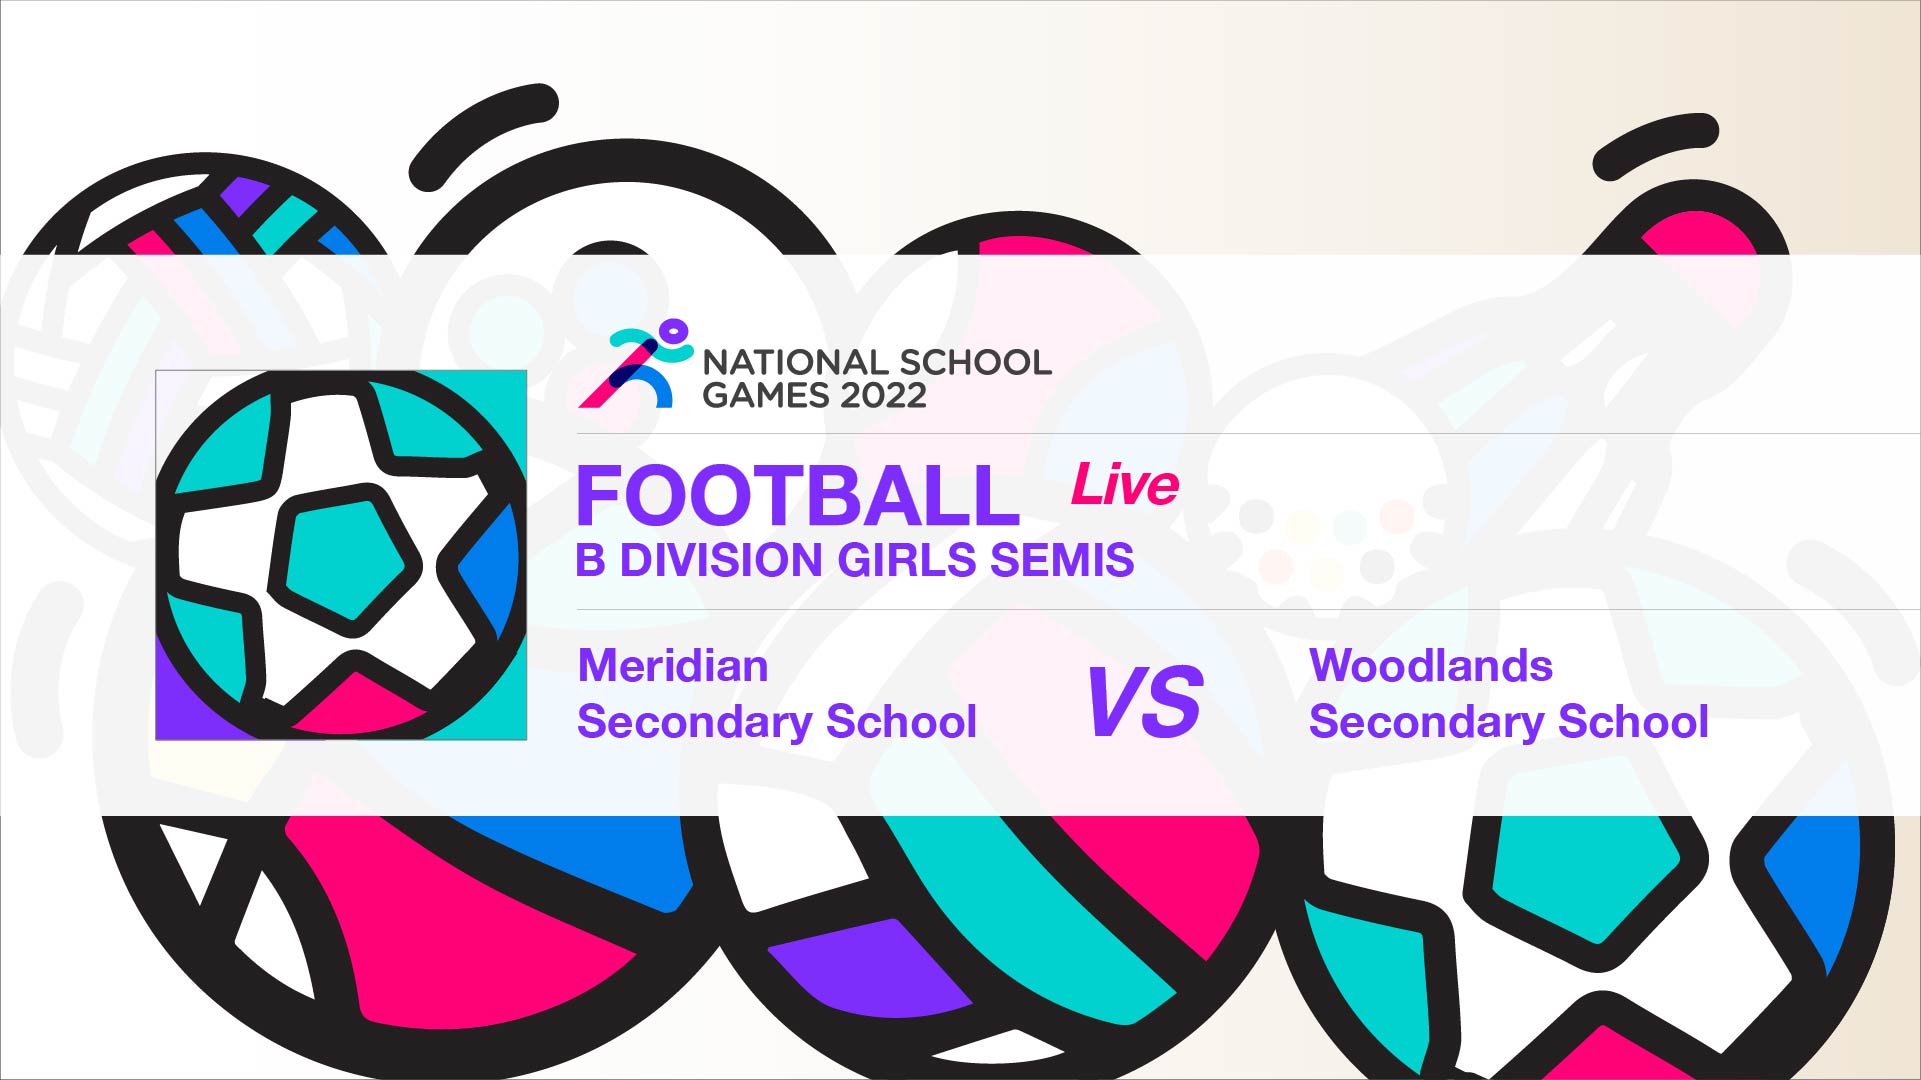 SSSC Football B Division Girls Semis | Meridian Secondary School vs Woodlands Secondary School